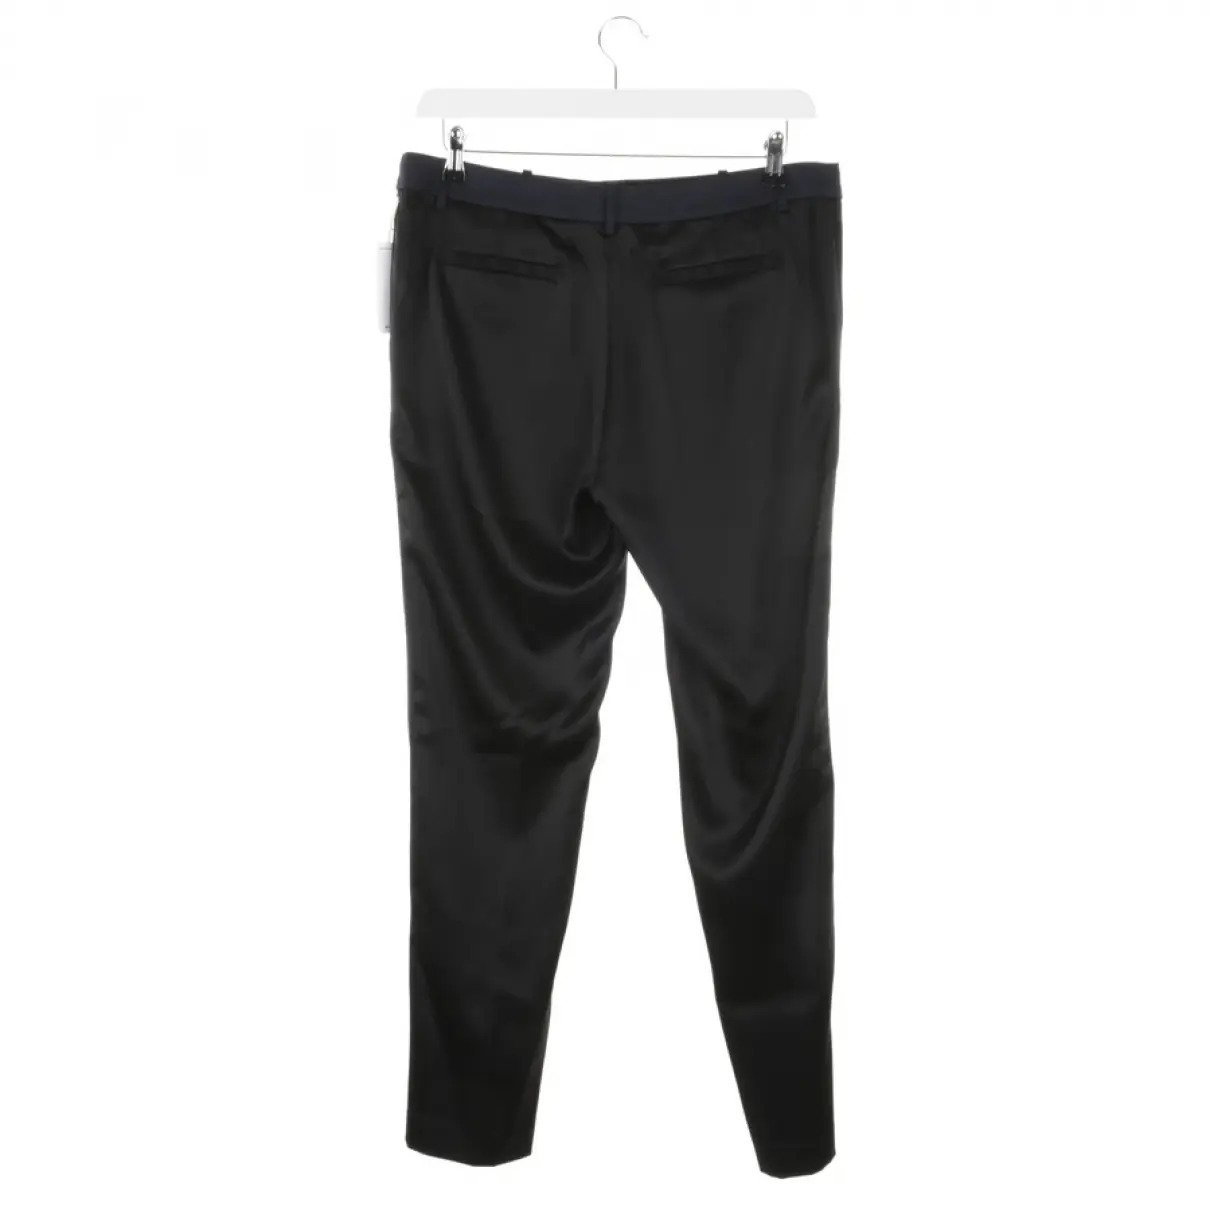 Buy J Brand Trousers online